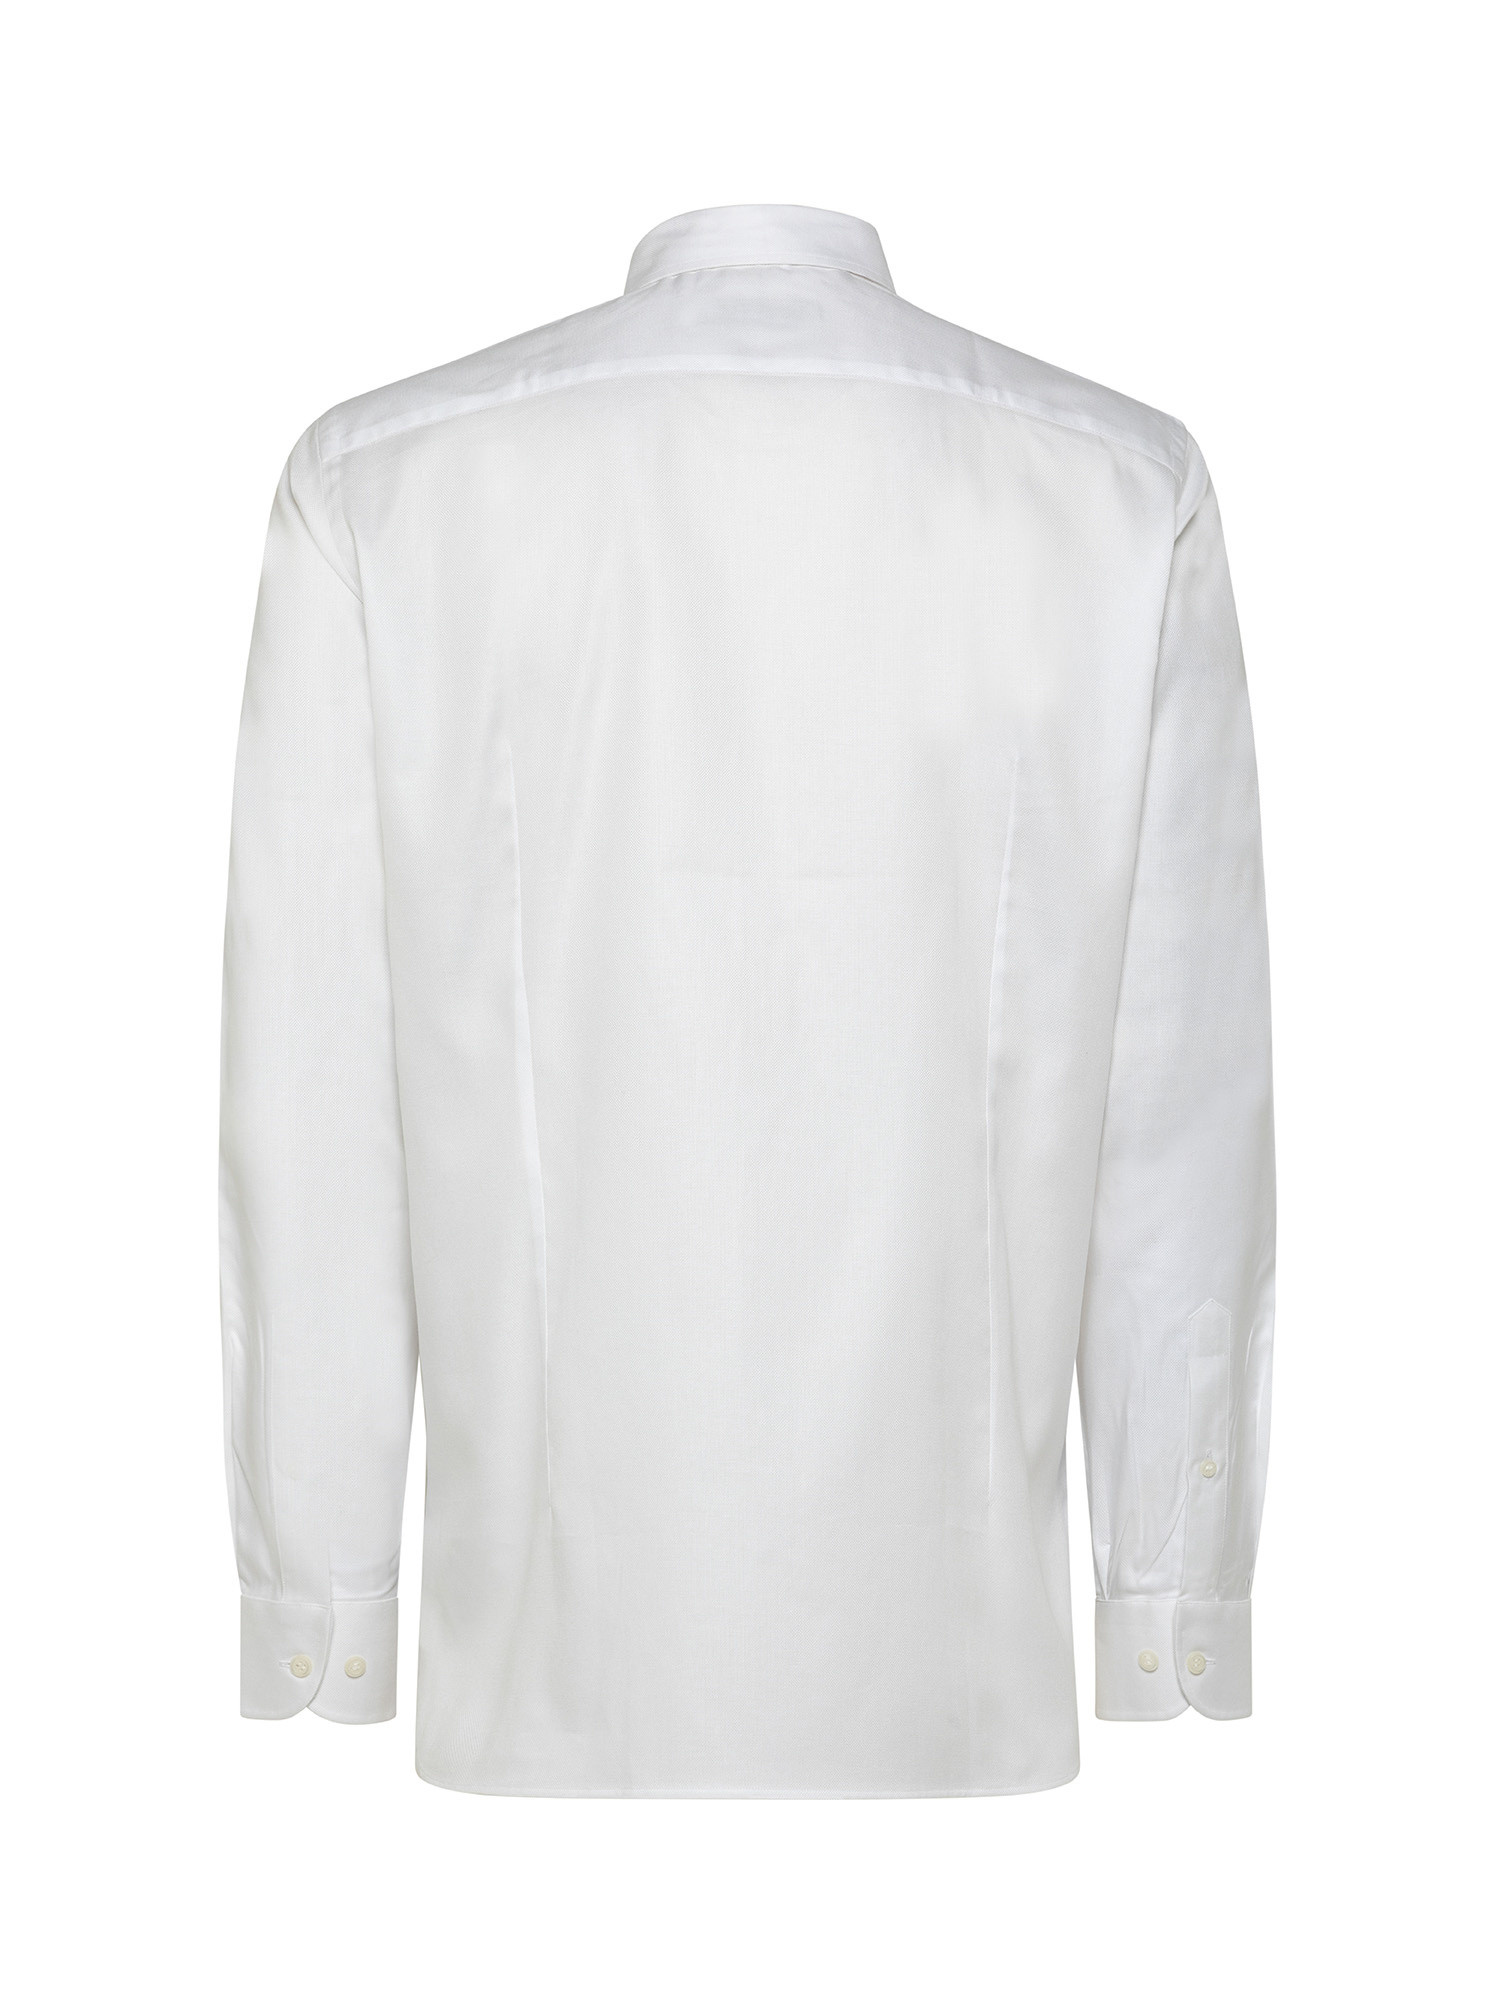 Camicia slim fit in puro cotone, Bianco 1, large image number 2